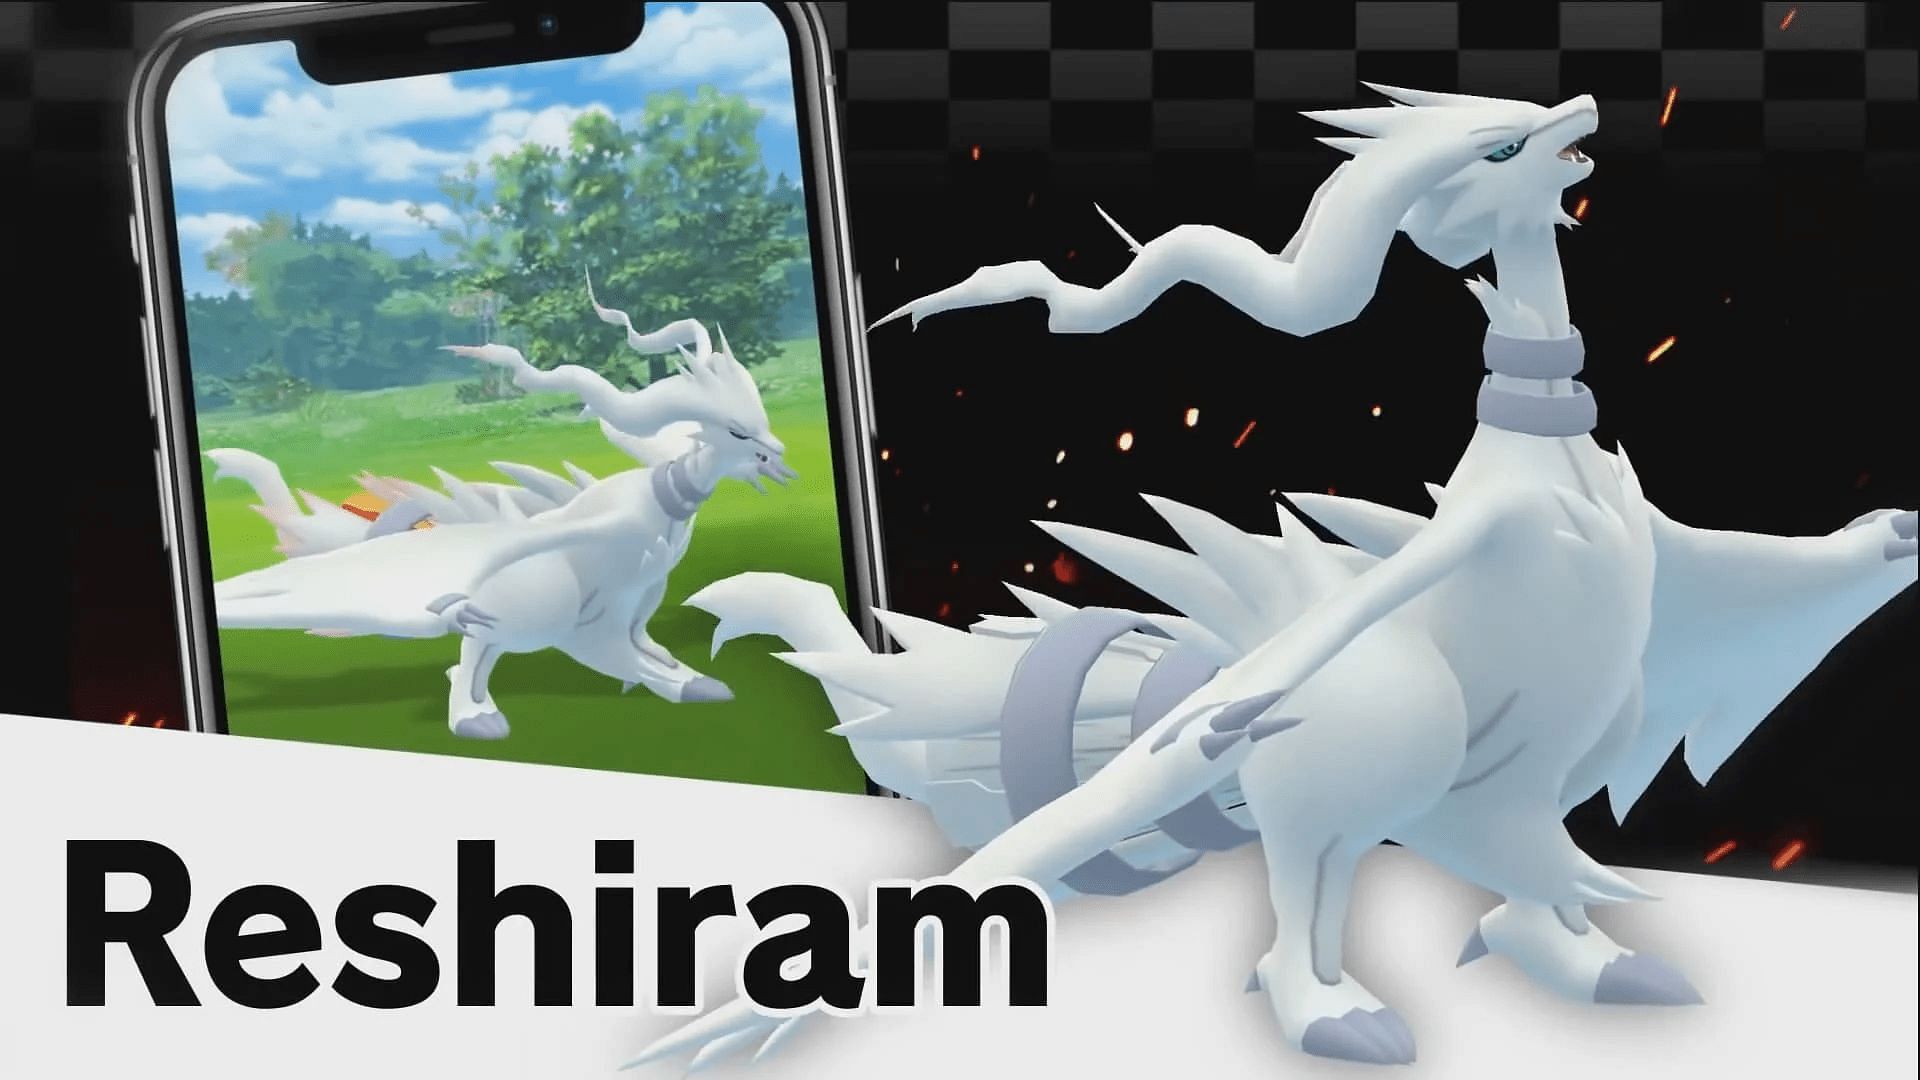 Reshiram in its Pokemon GO announcement trailer.